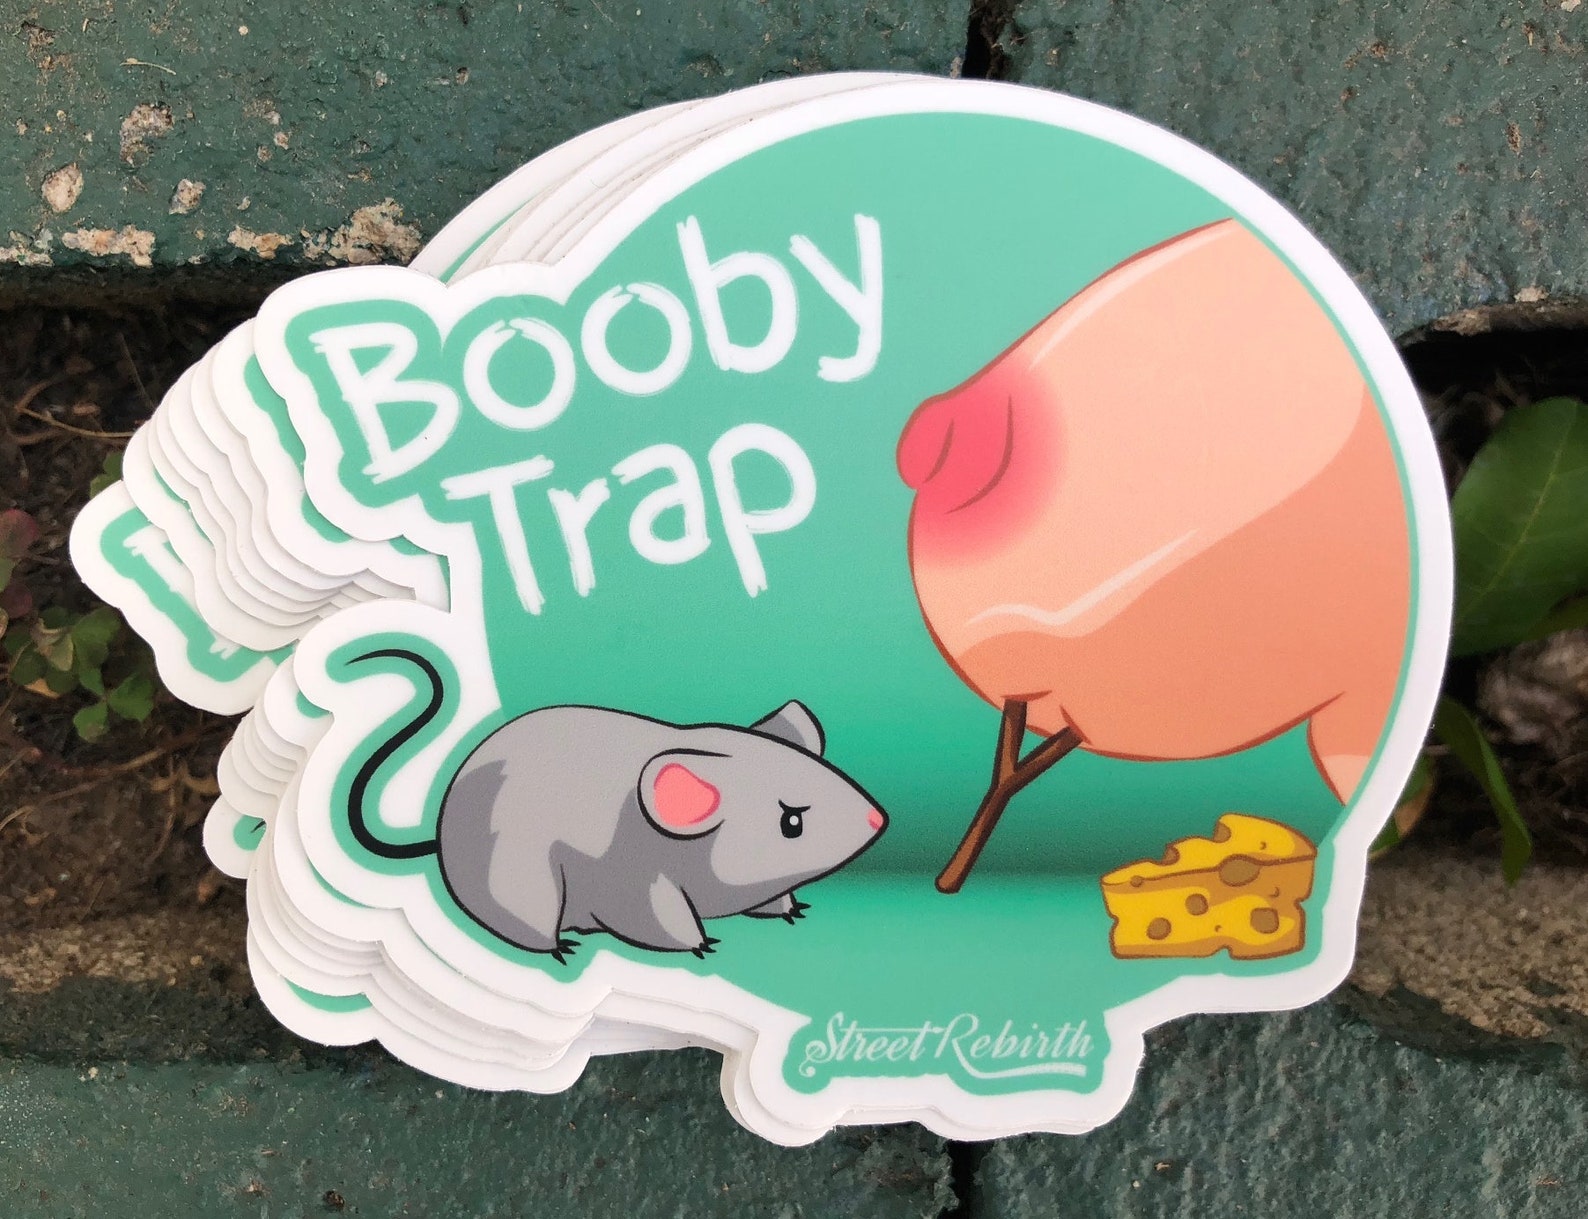 Bob Saget - Booby Trap. R6 Booby Trap. Трэп Стикеры.